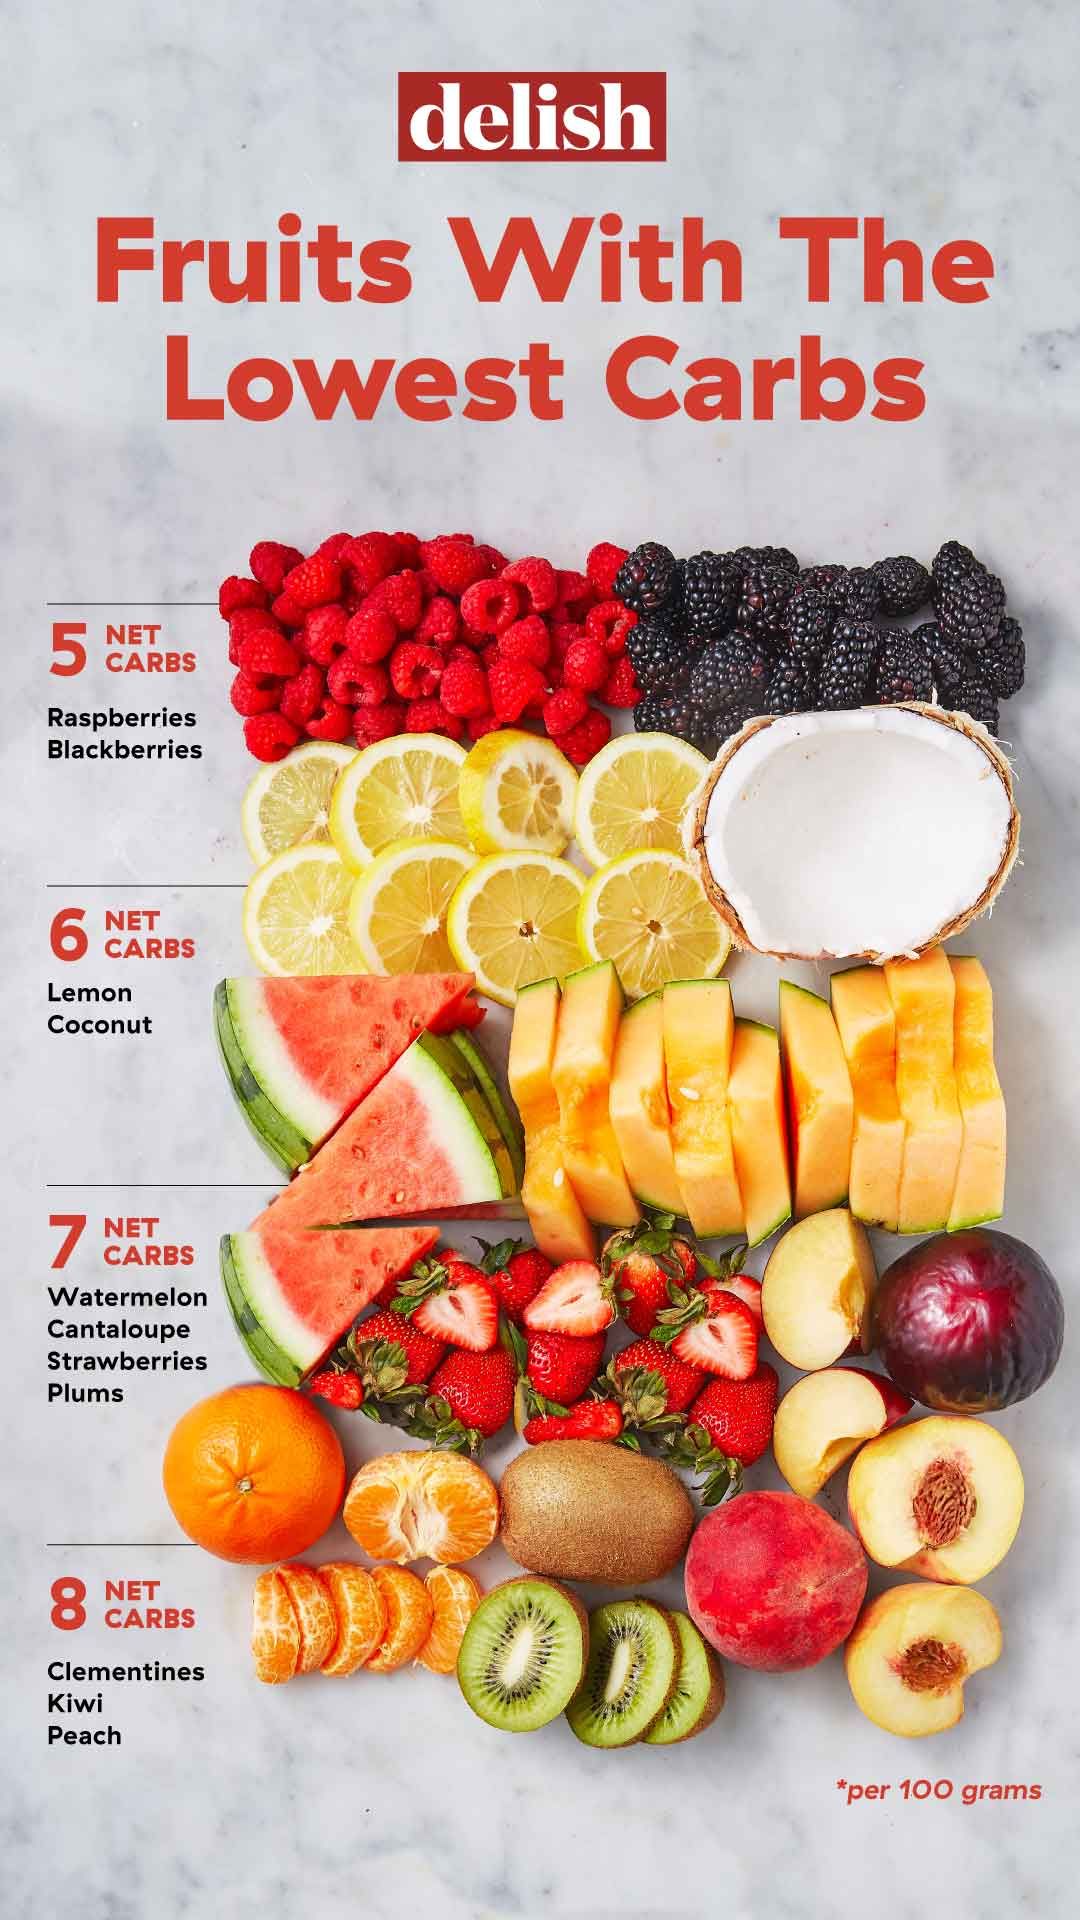 Fruits Their Benefits Chart